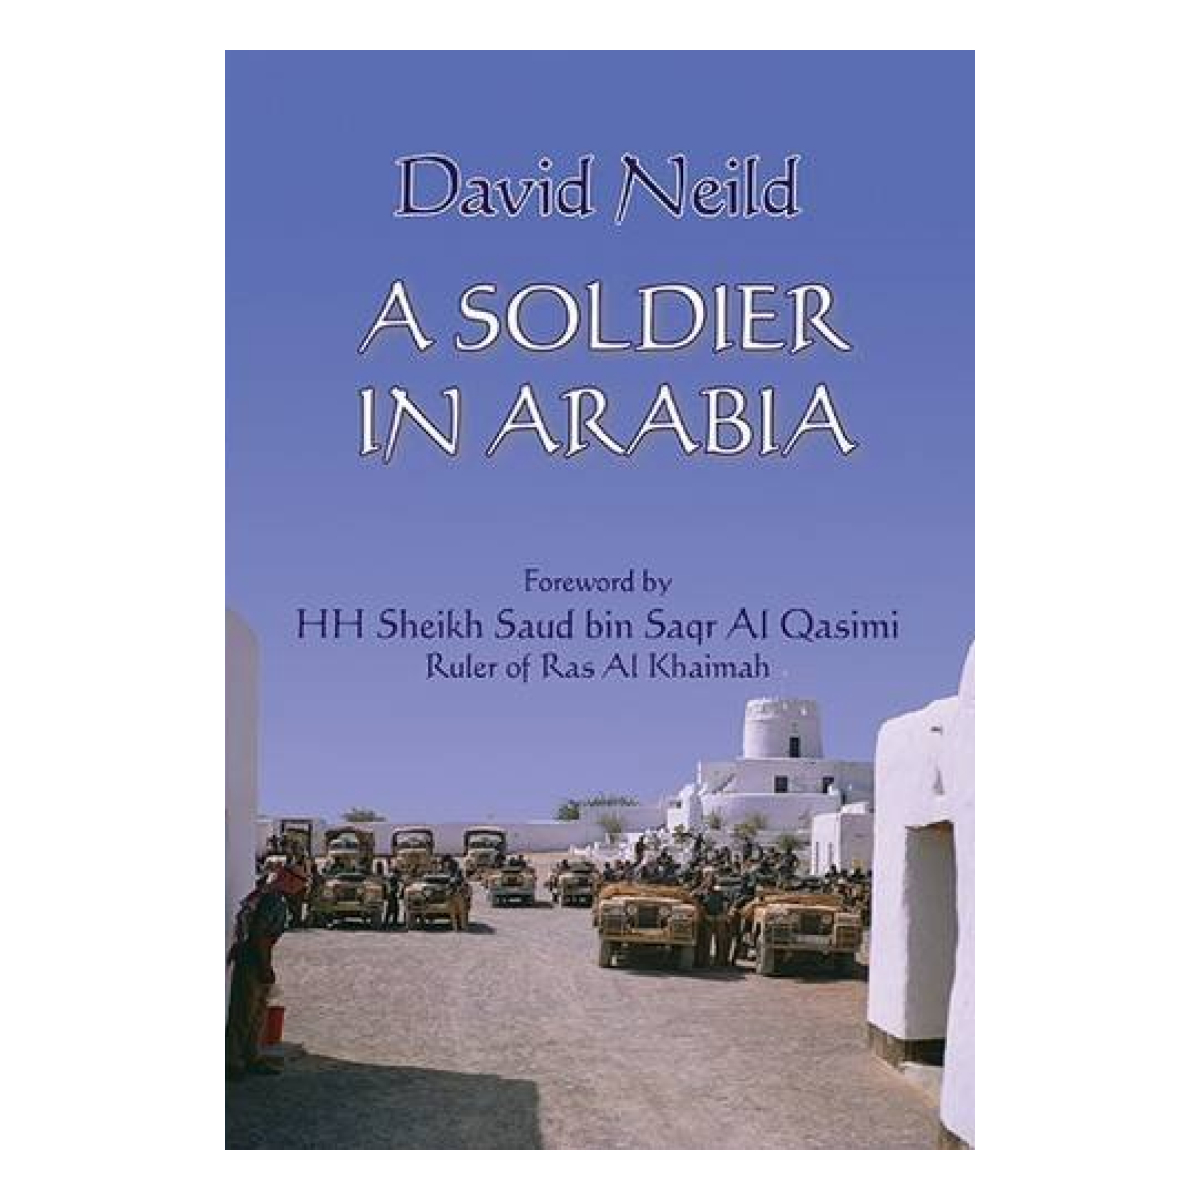 A Soldier in Arabia